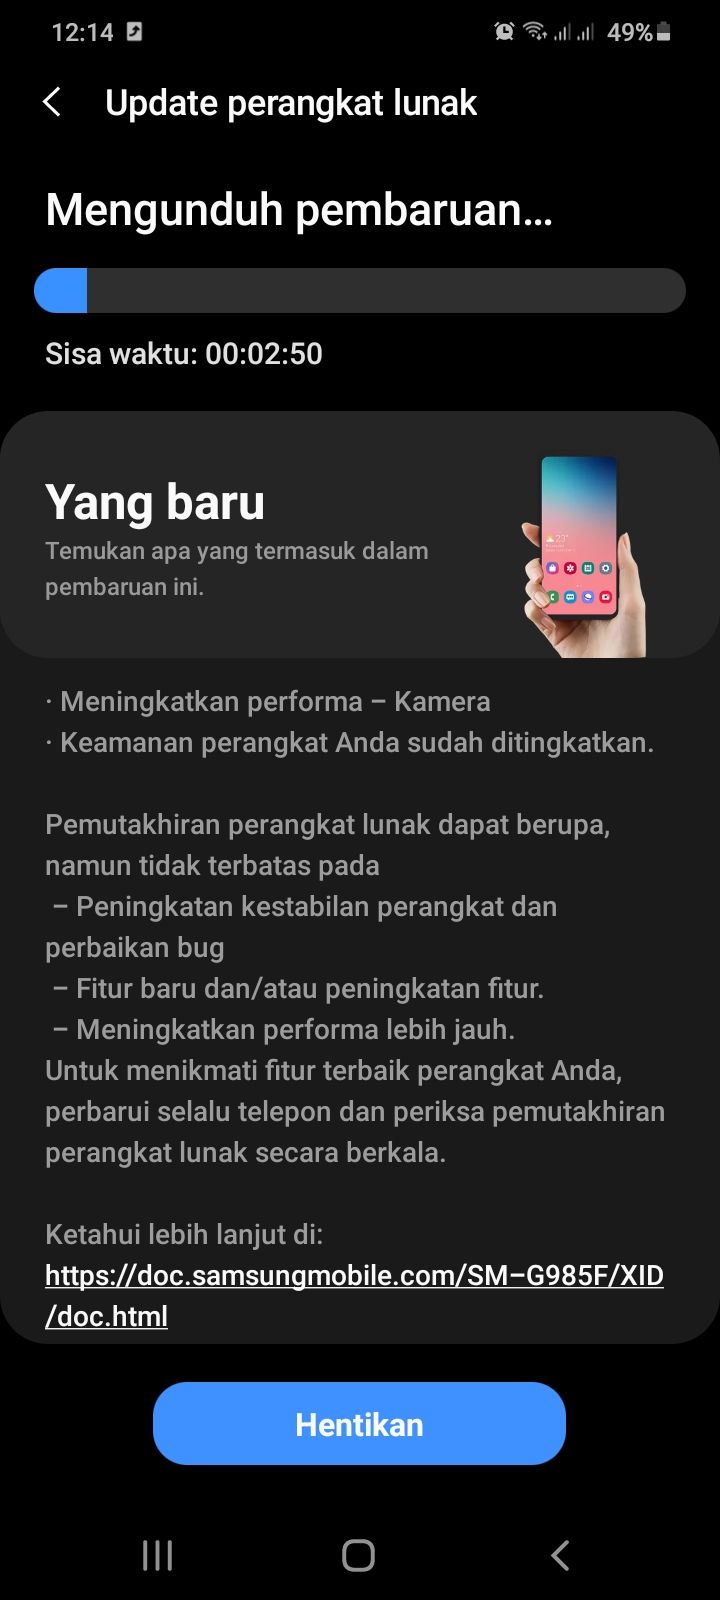 Samsung Galaxy m21 Android Theme. Обновление one UI 4 Android 12. Android 12 one UI 4.1. Обновление one UI 4.1 (Android 12)самсунг m31. Update terbaru